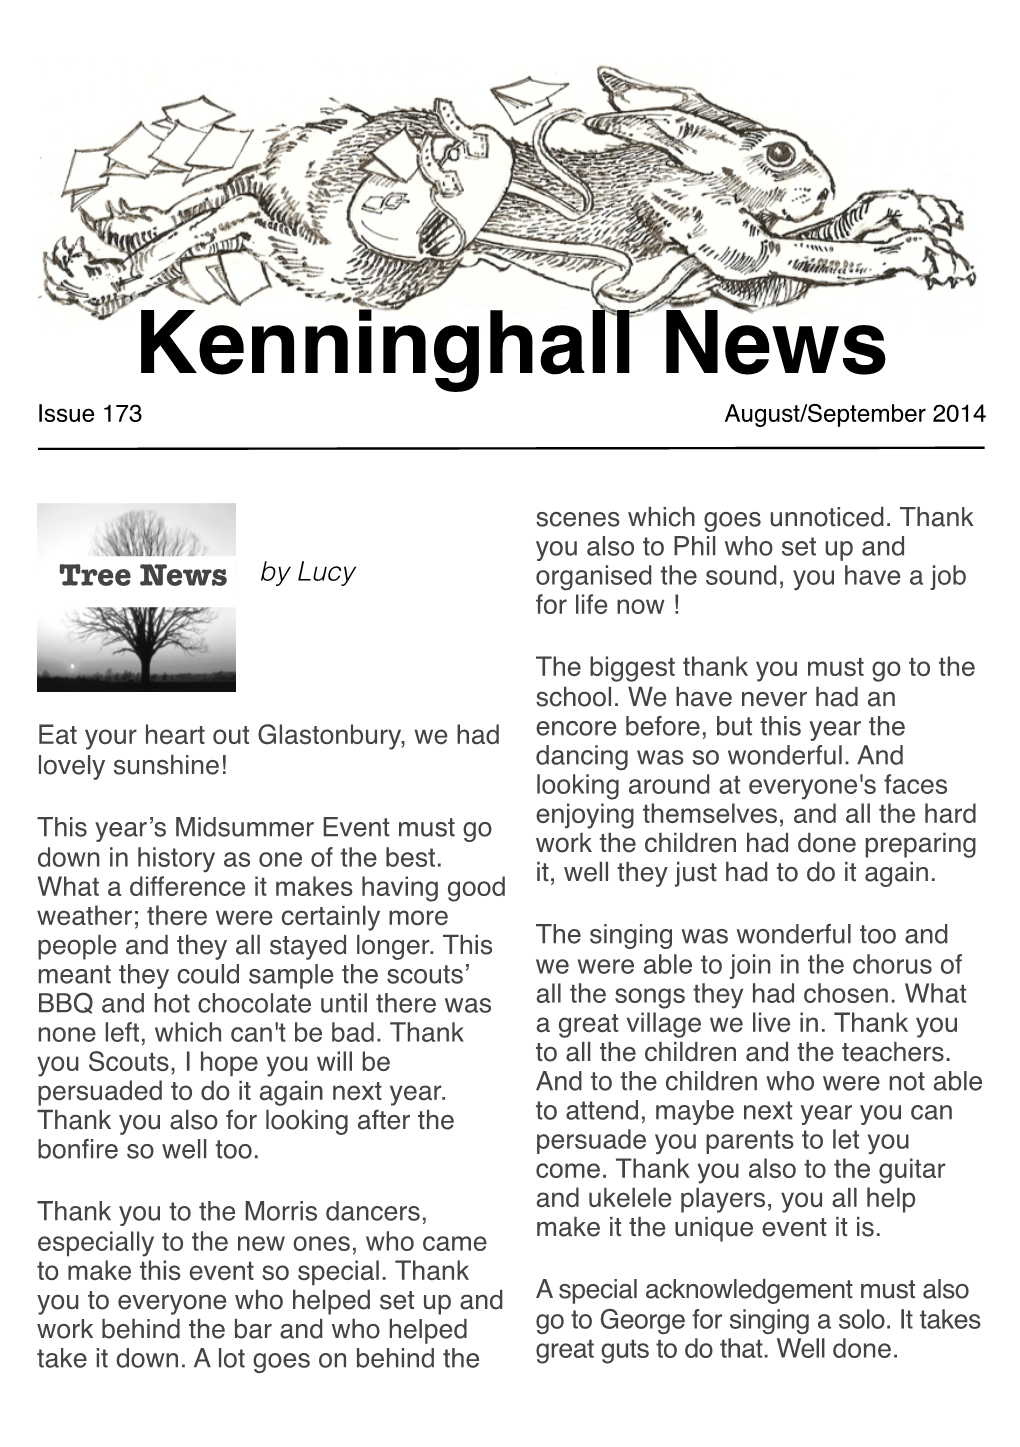 Kenninghall News Issue 173 August/September 2014